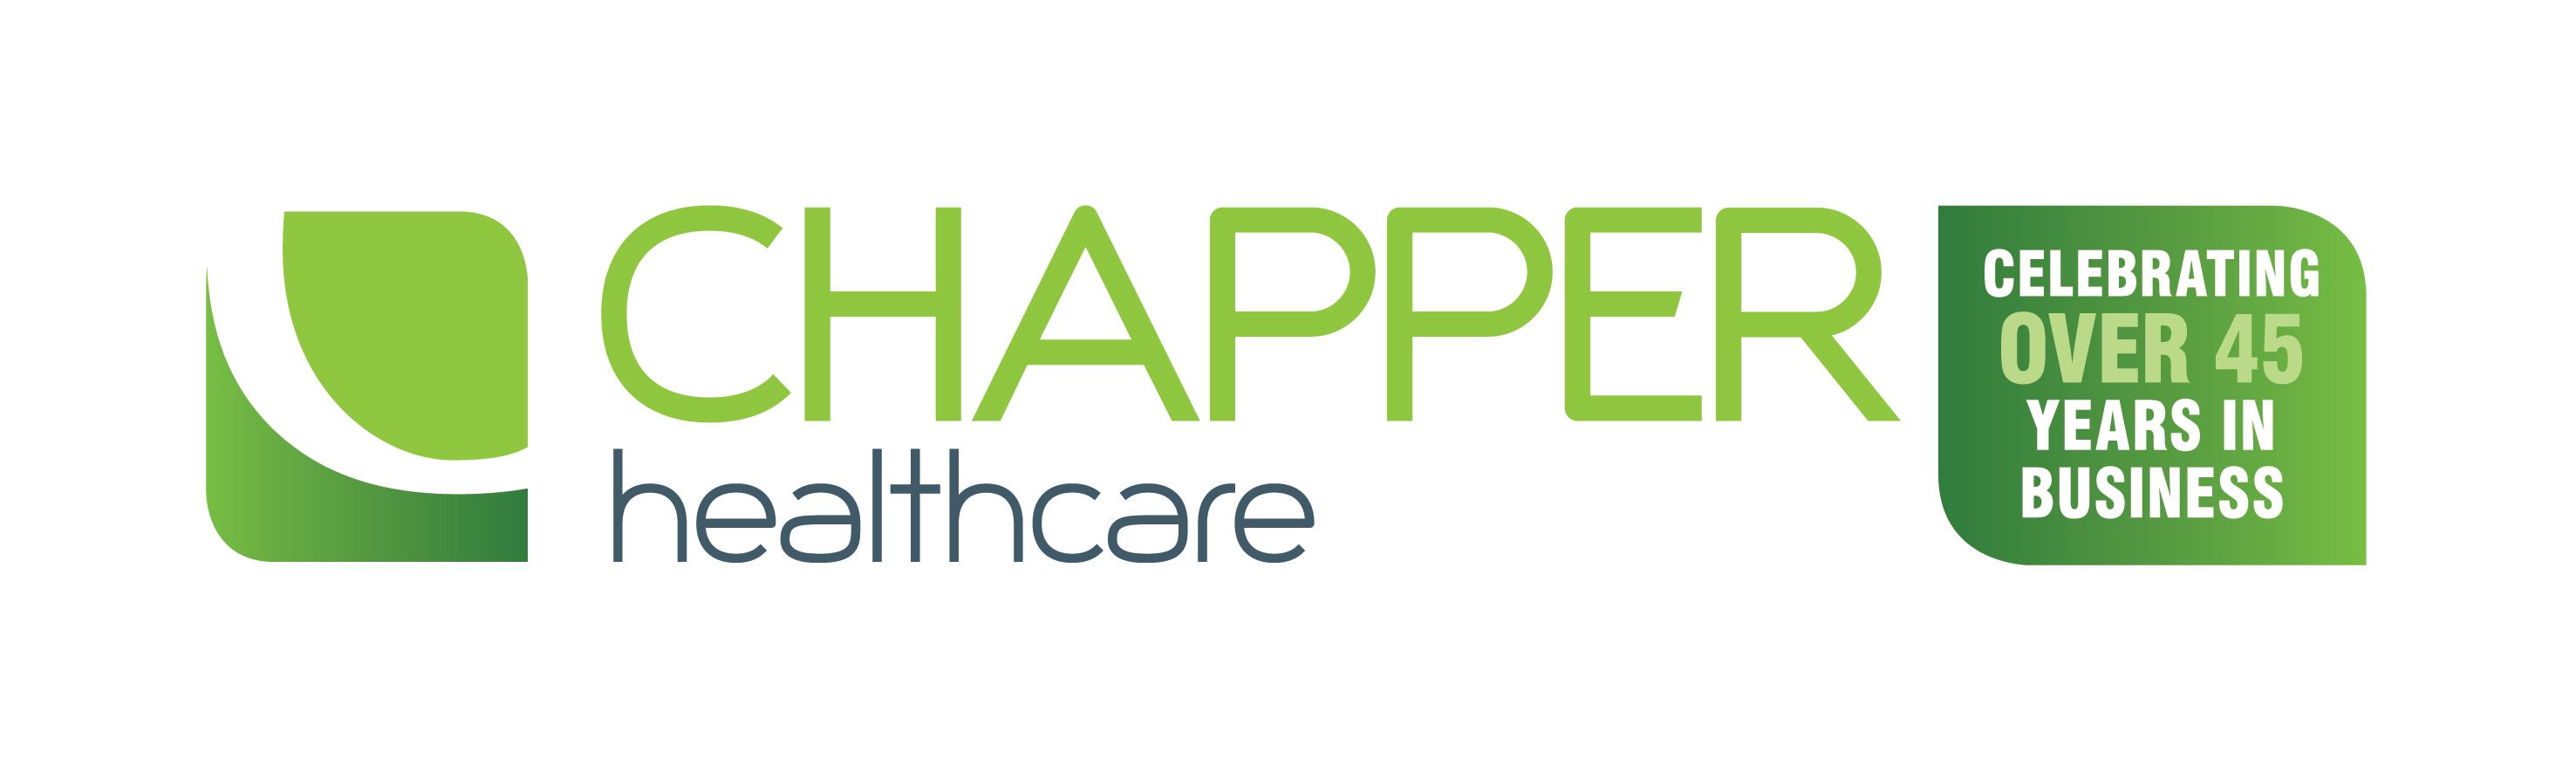 Chapper Healthcare